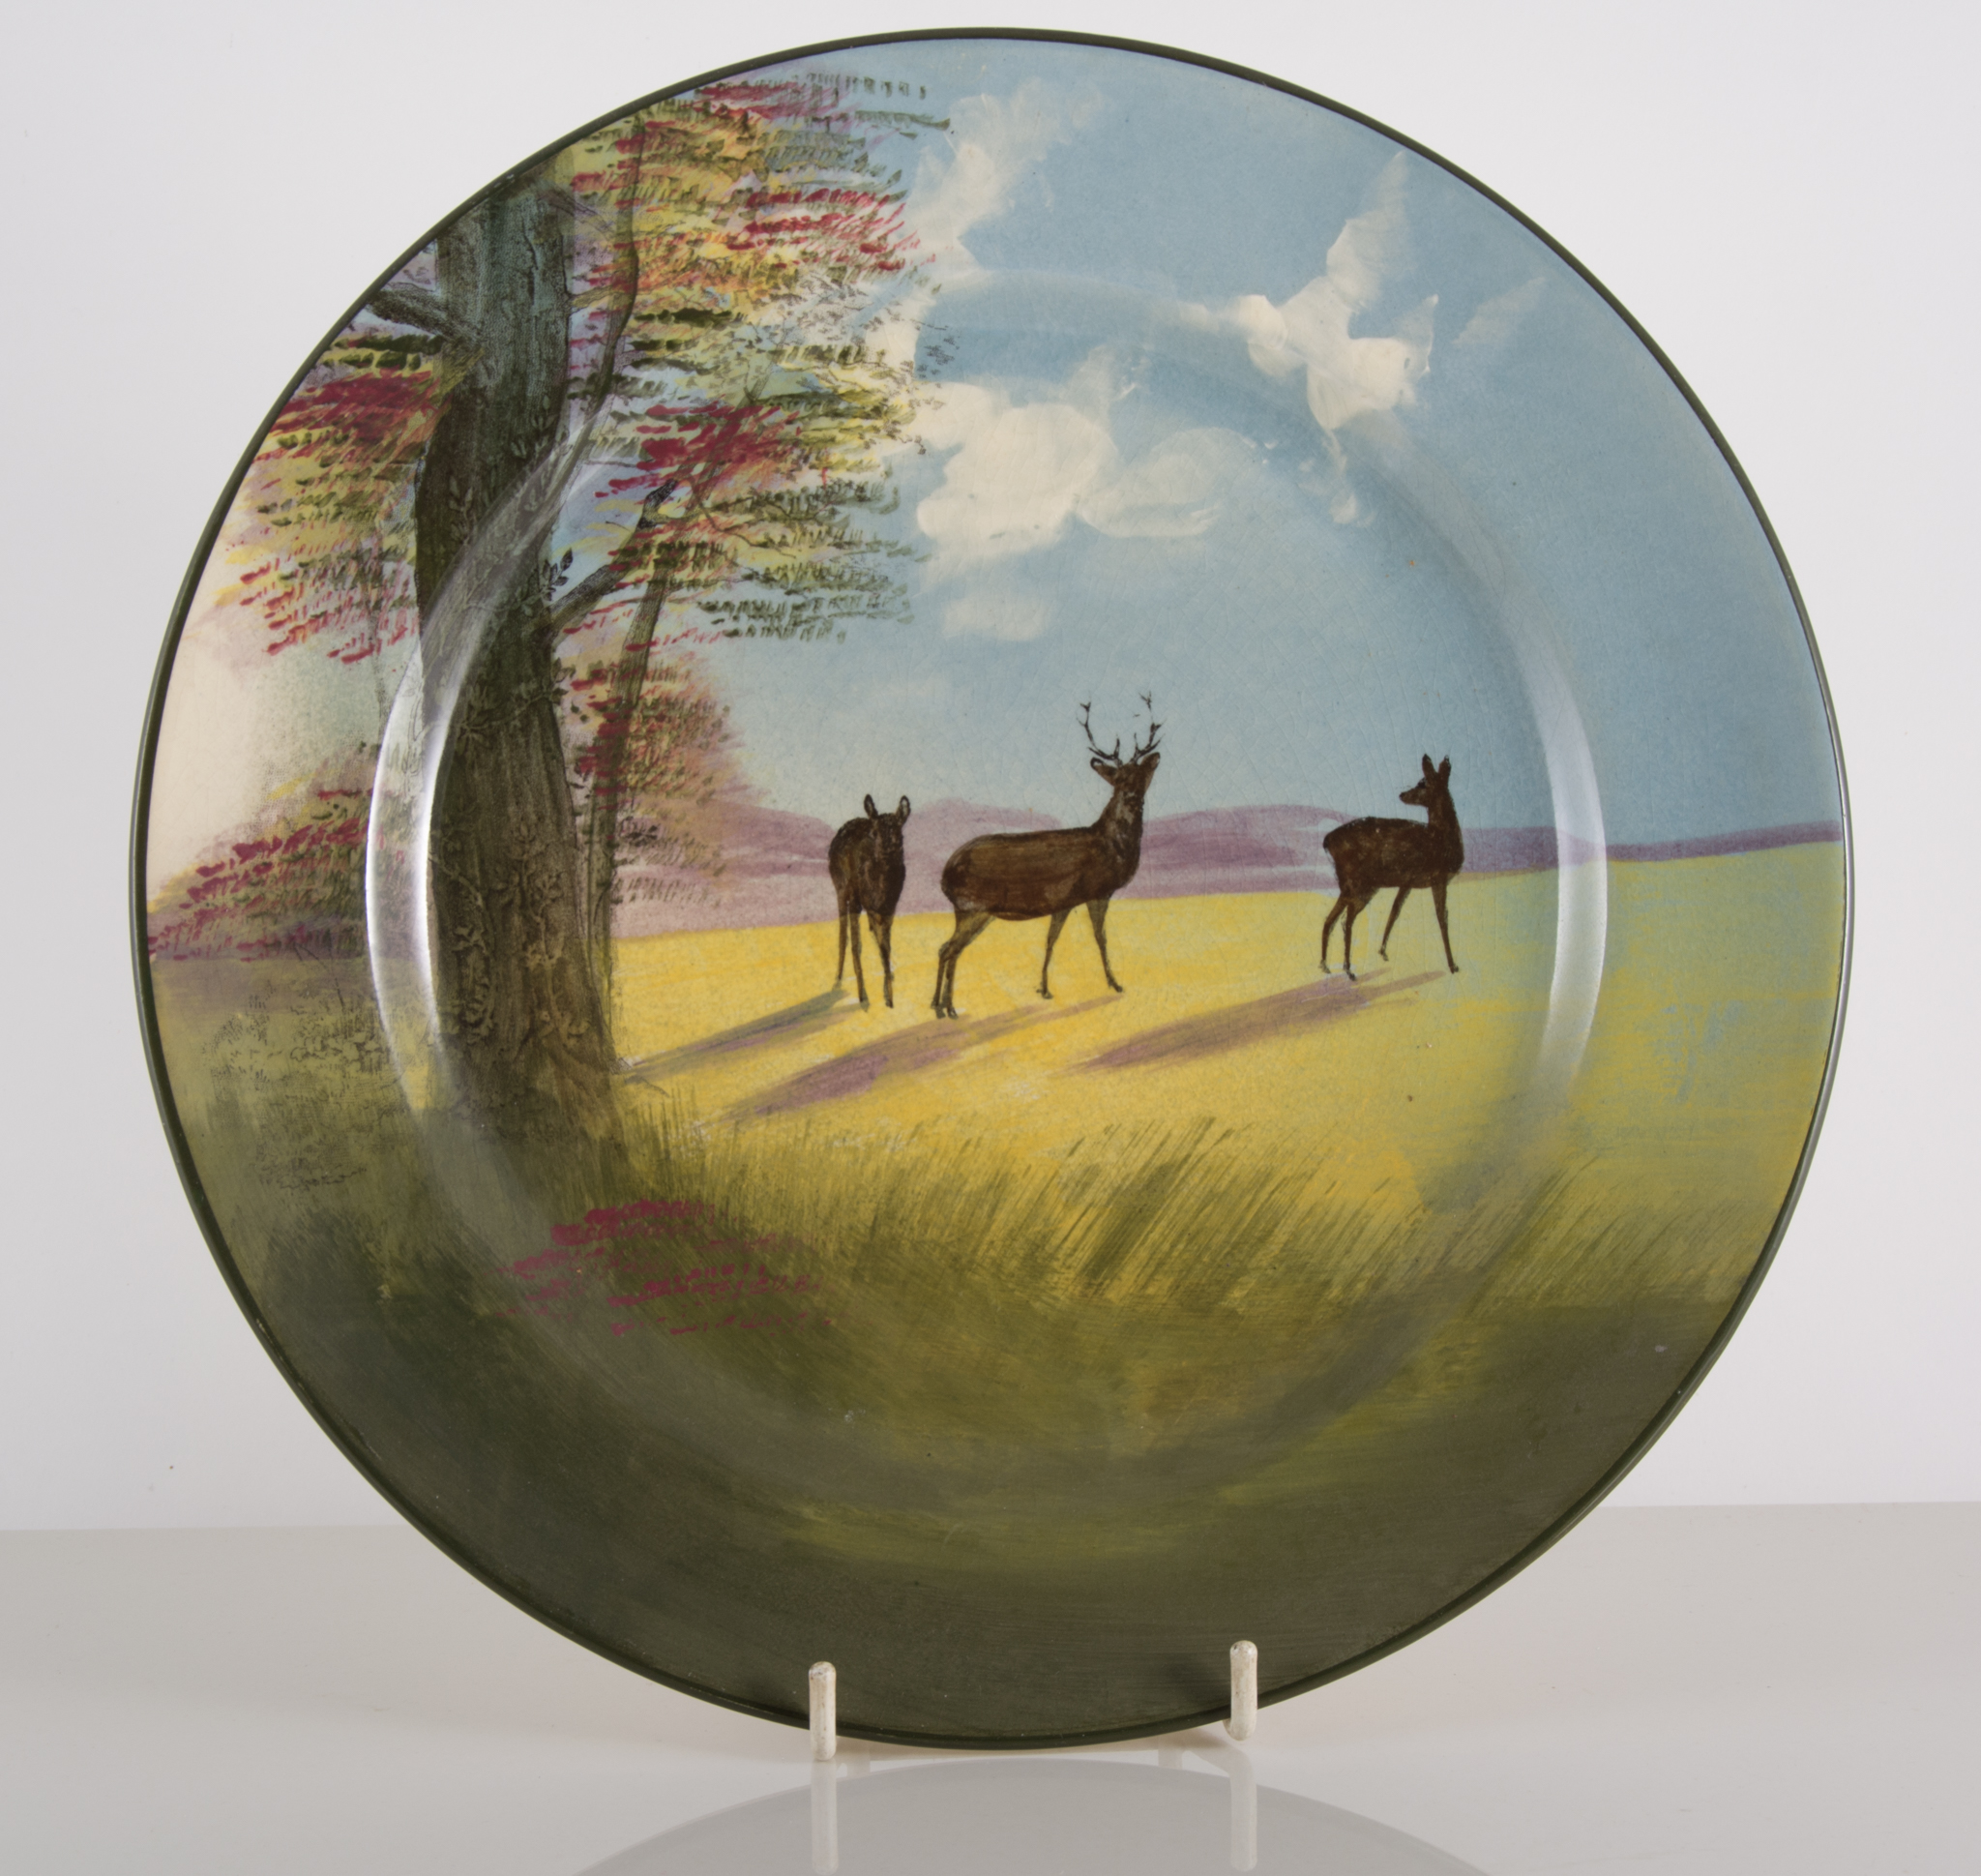 Royal Doulton landscape series ware plate, diameter 27cm, another silhouette landscape plate, - Image 2 of 2